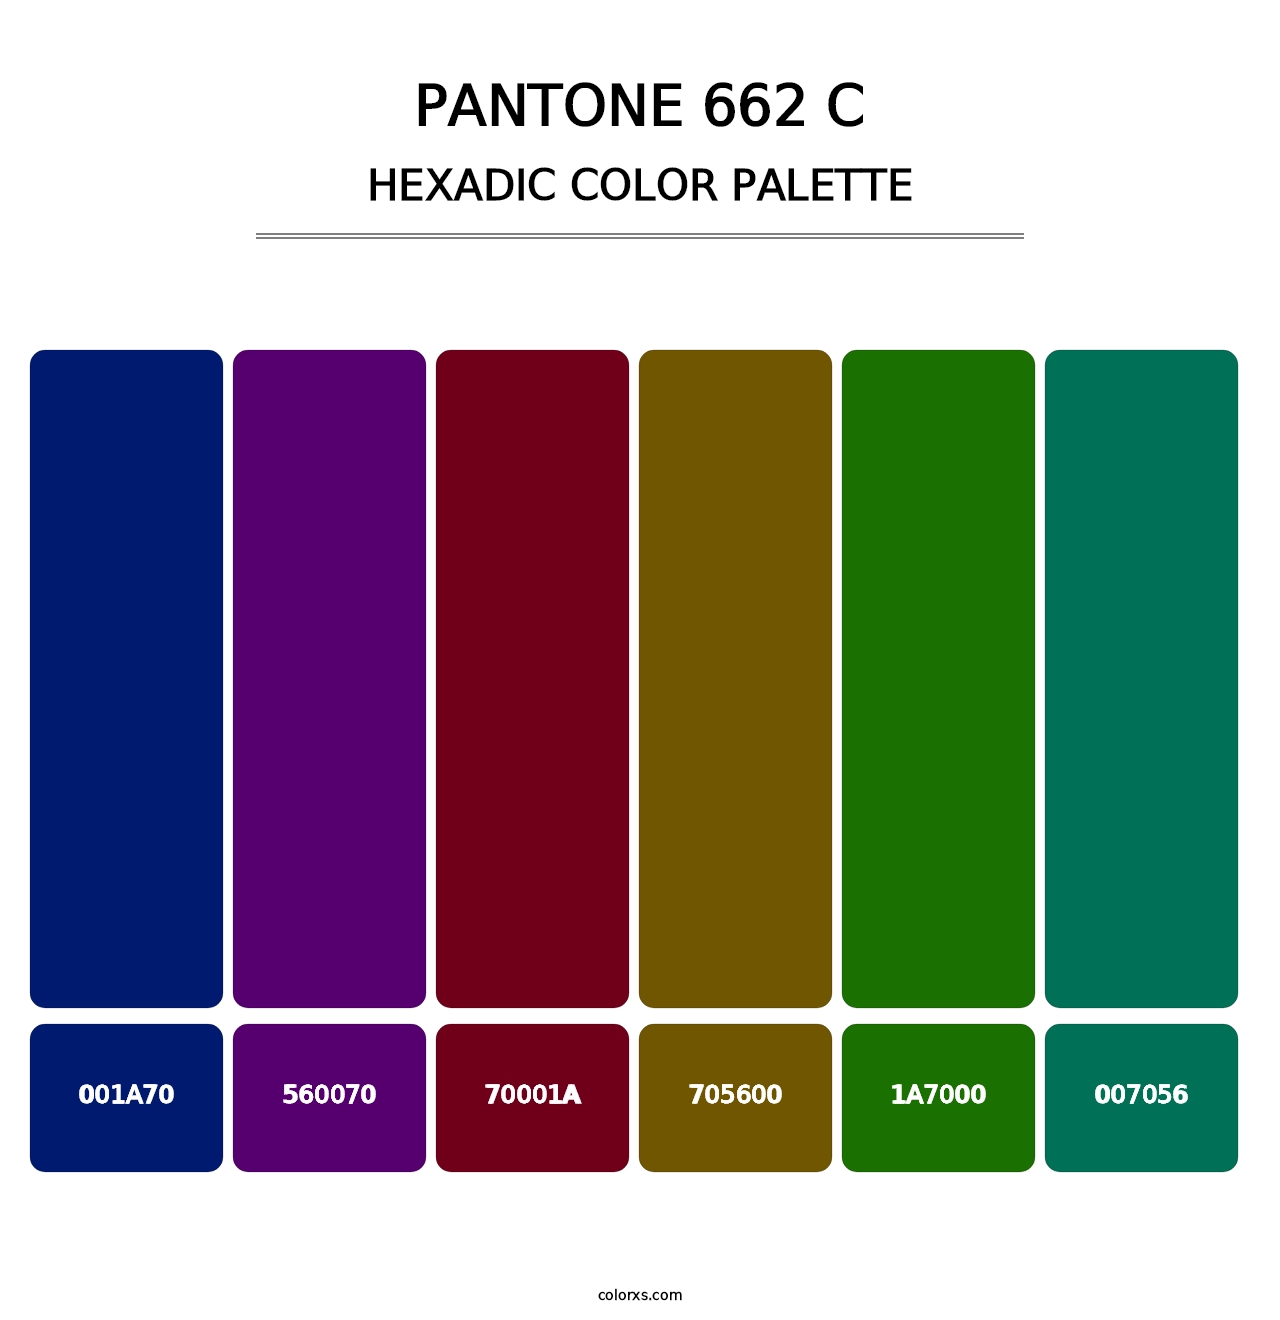 PANTONE 662 C - Hexadic Color Palette